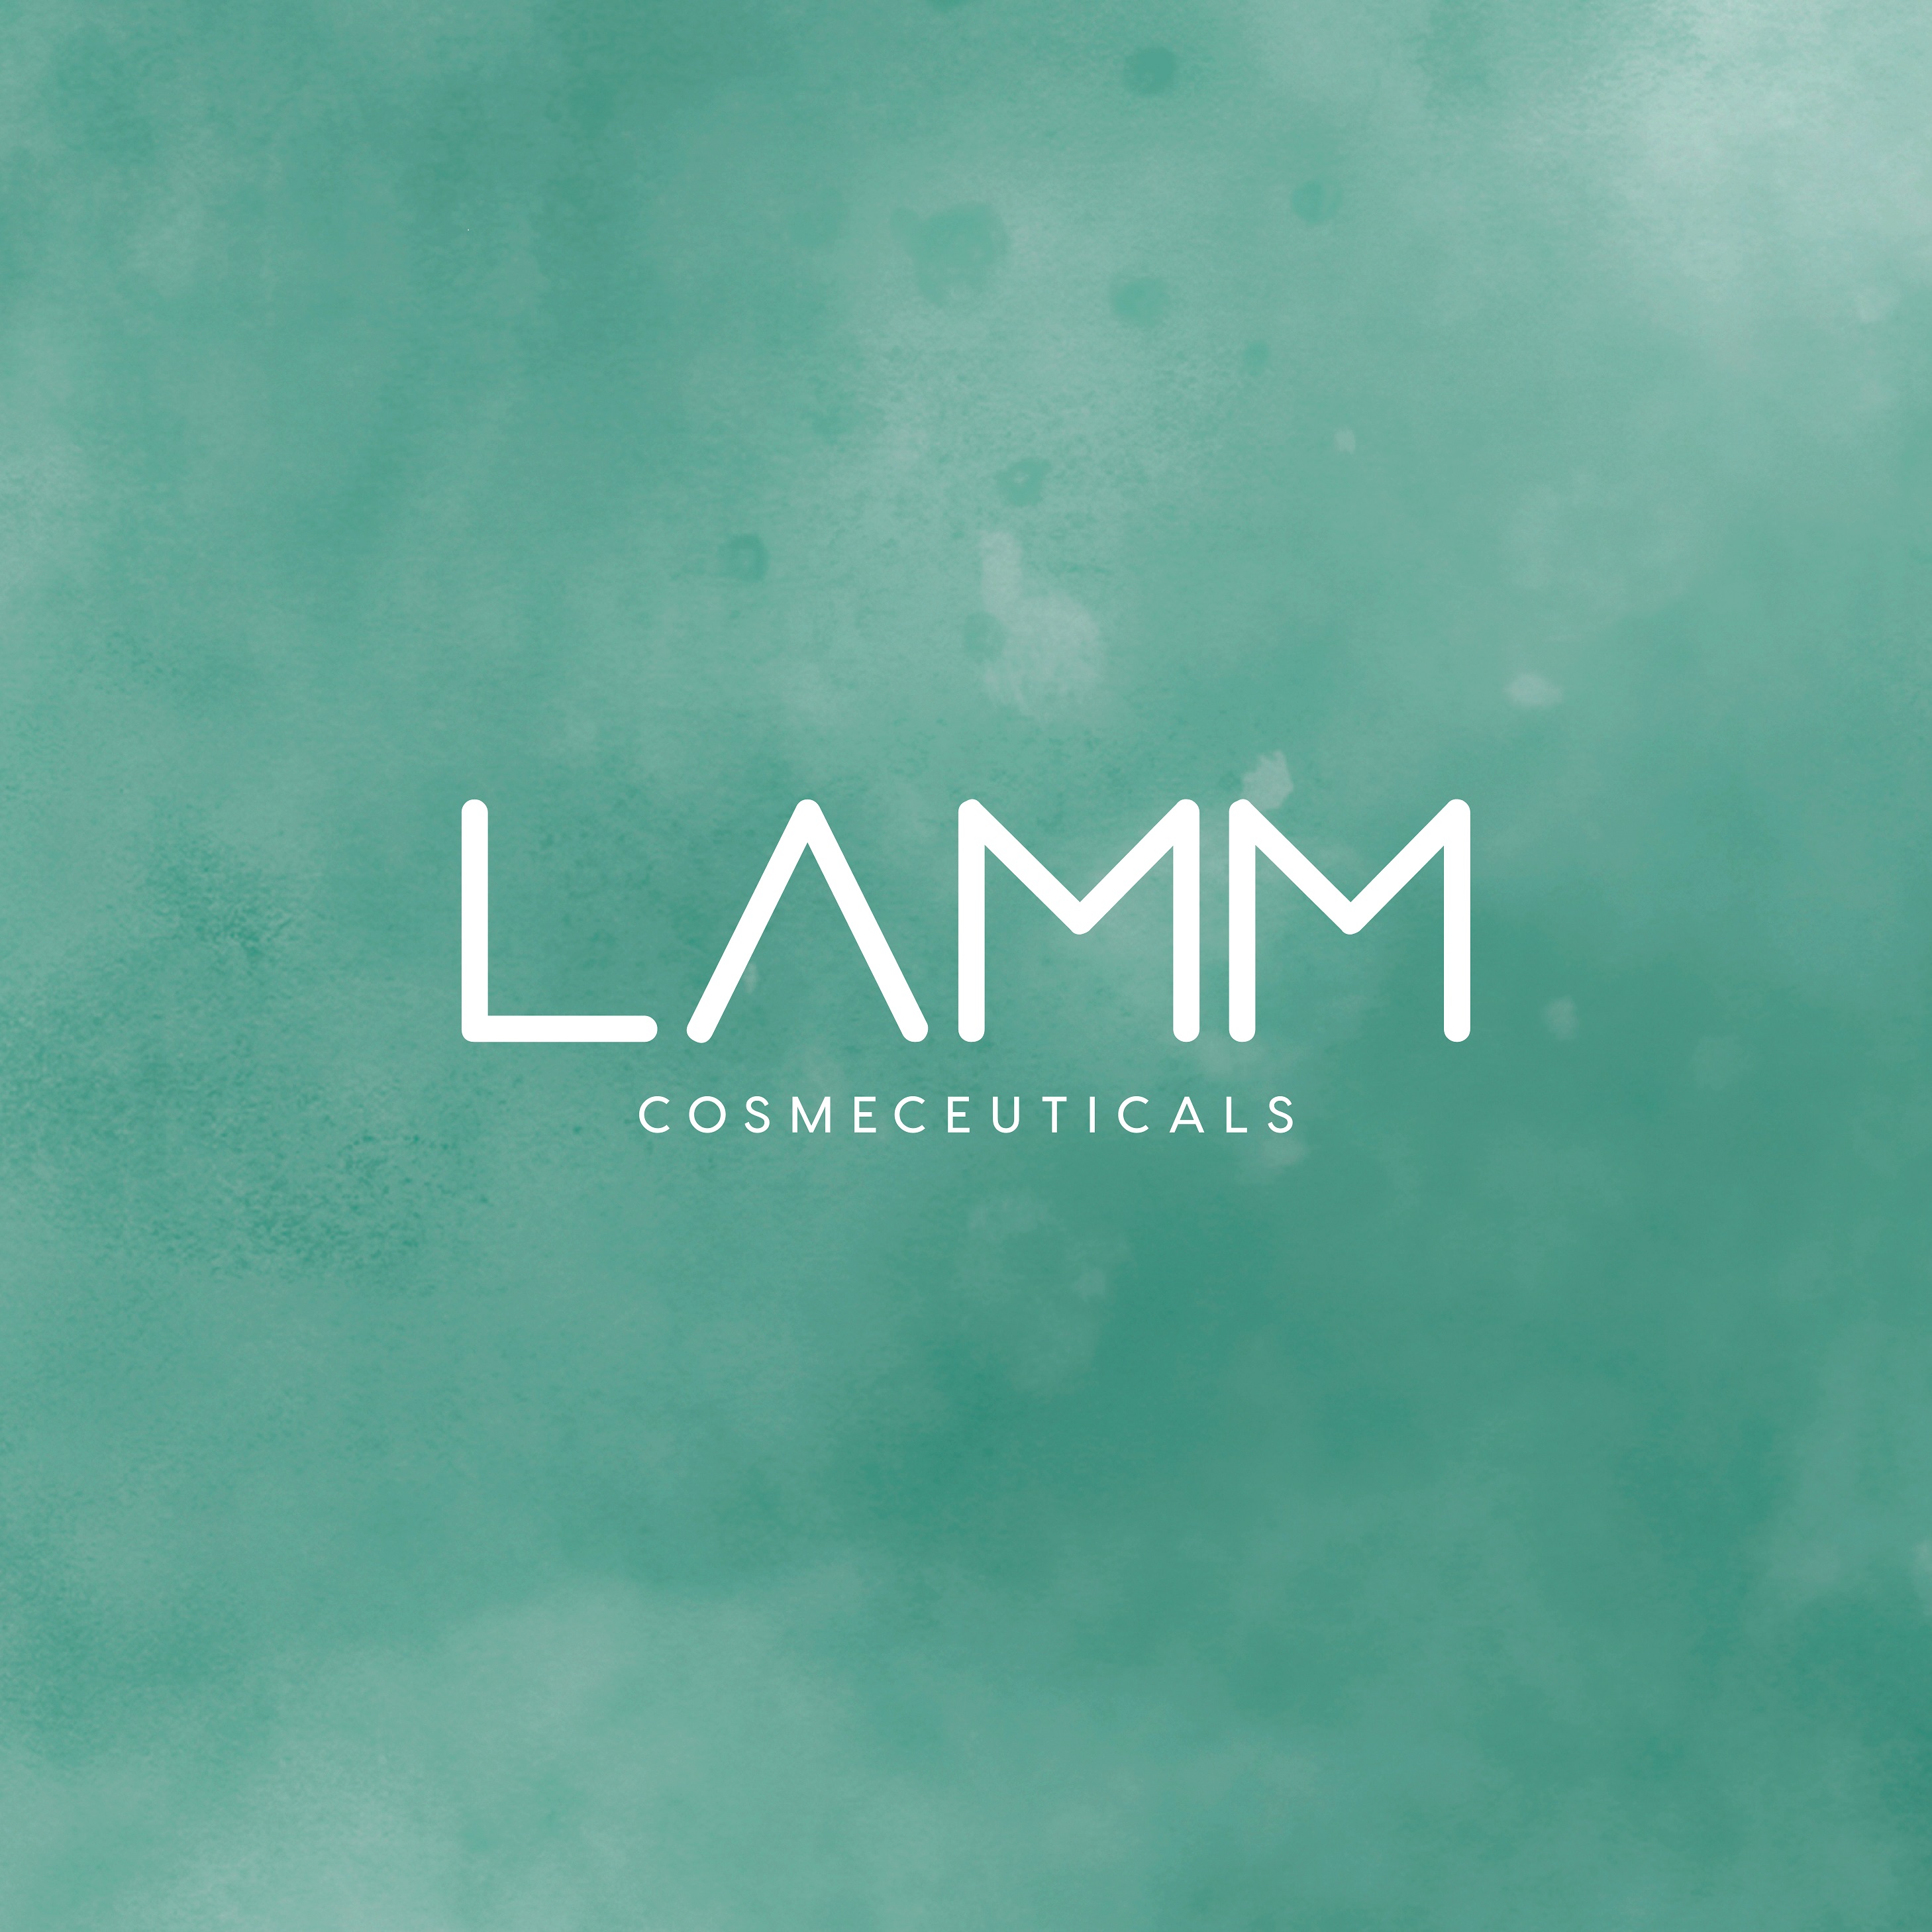 The LAMM Cosmeceuticals